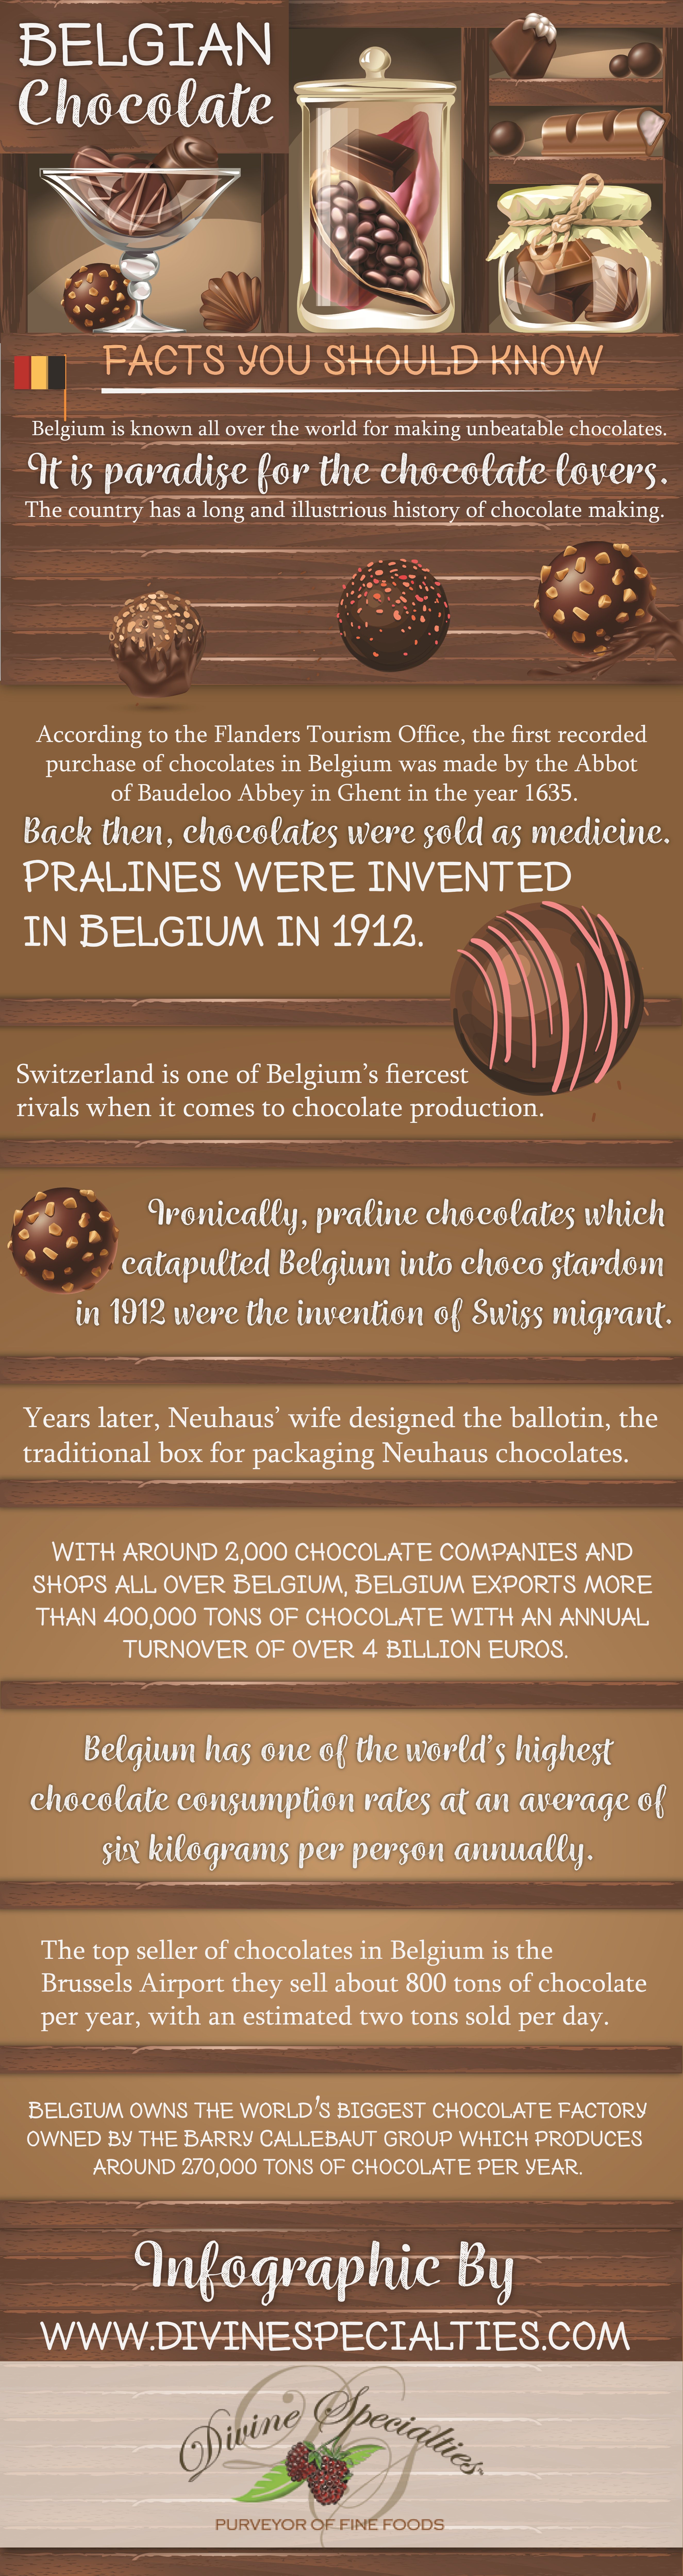 Belgian Chocolate Facts